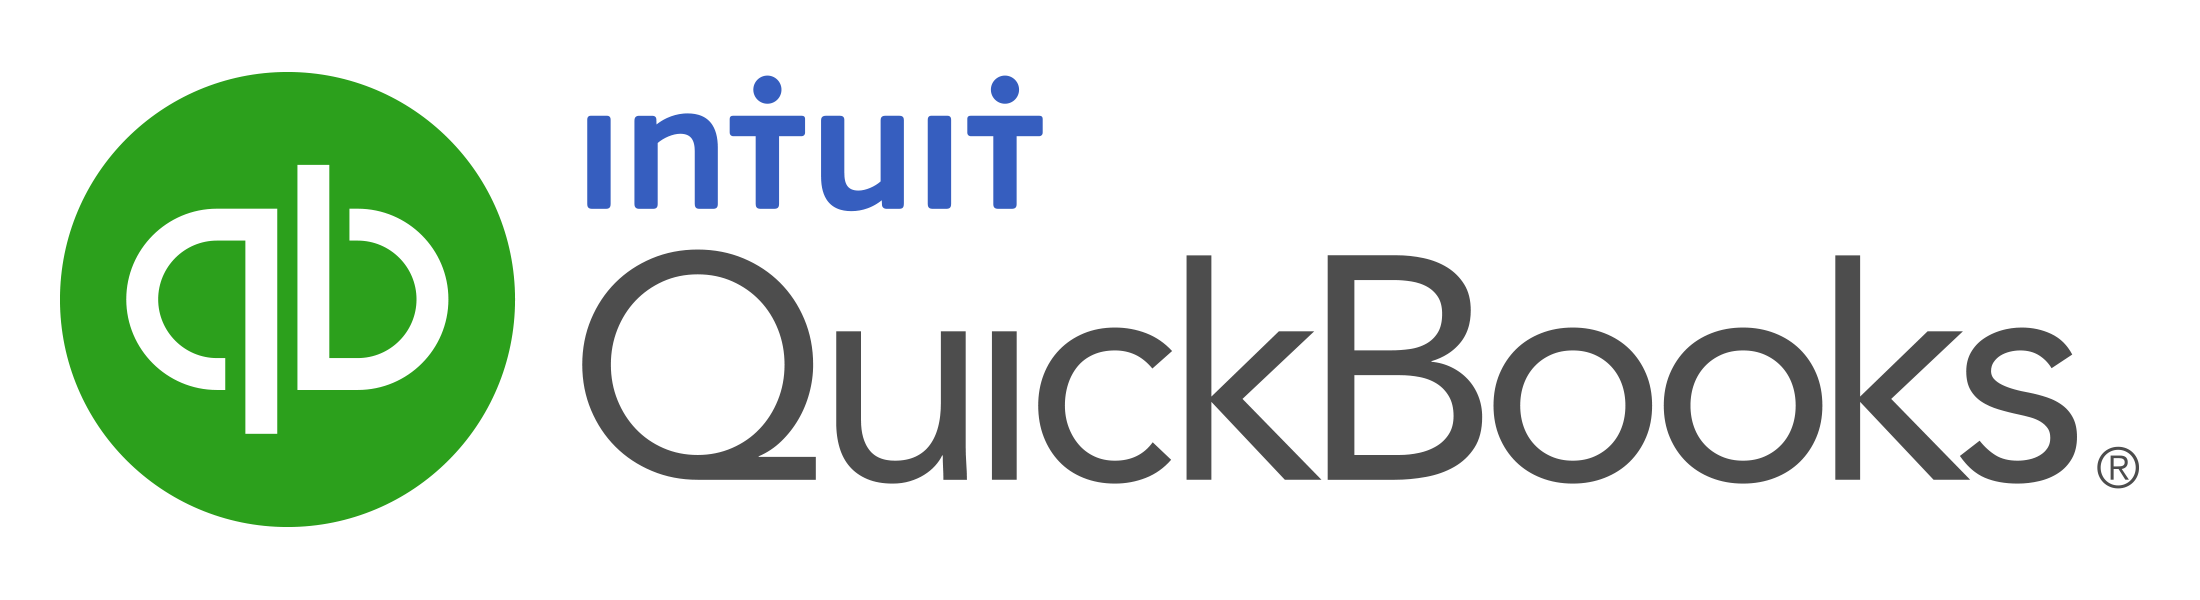 will quickbooks pro training help me with quickbooks online